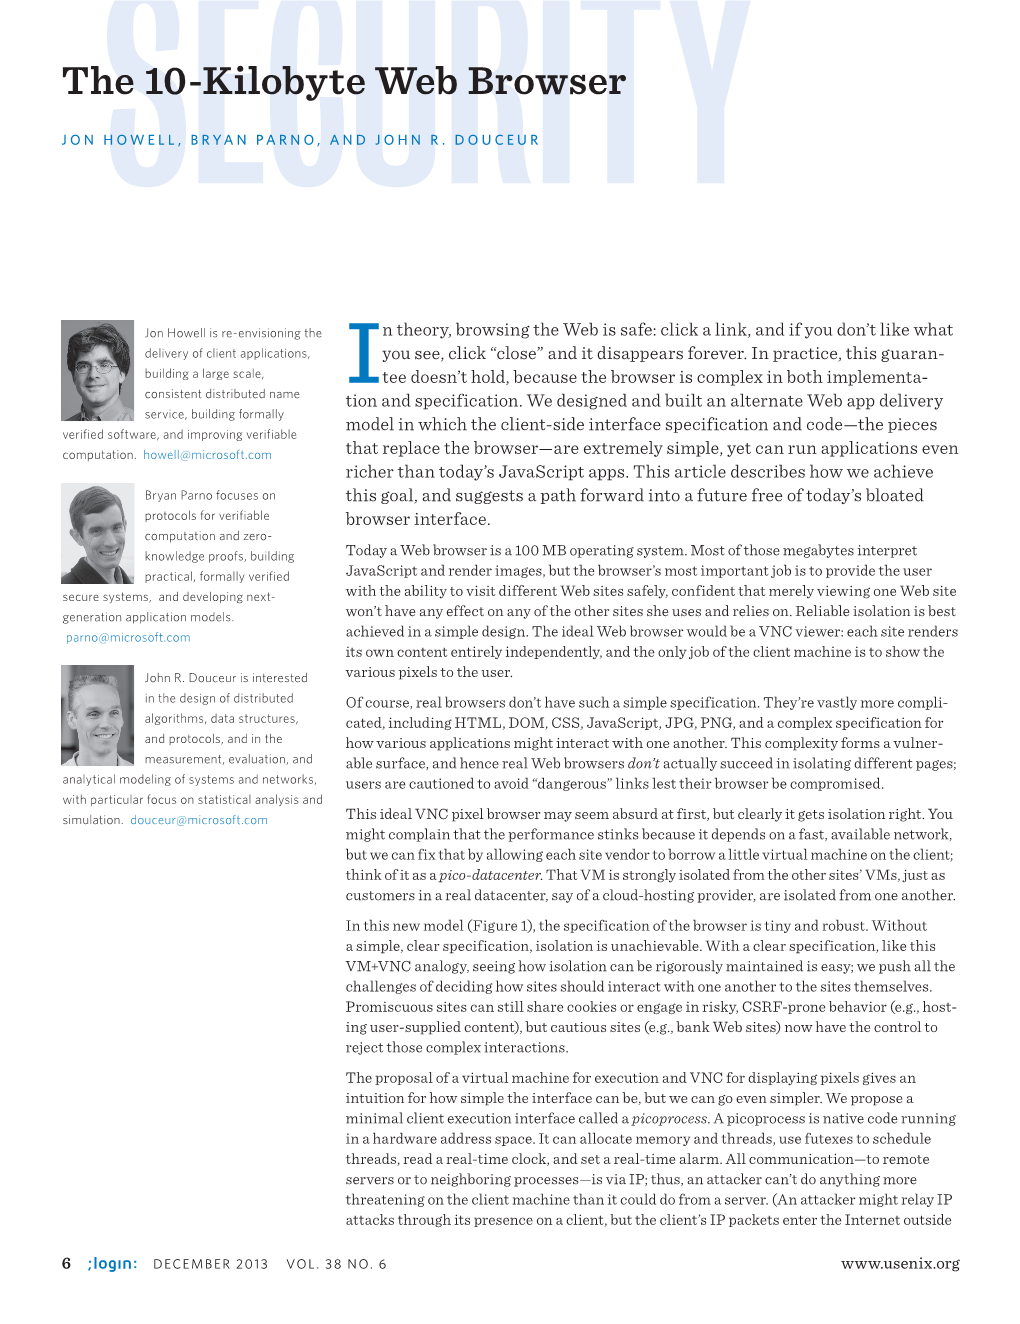 The 10-Kilobyte Web Browser Jon Securityhowell, Bryan Parno, and John R